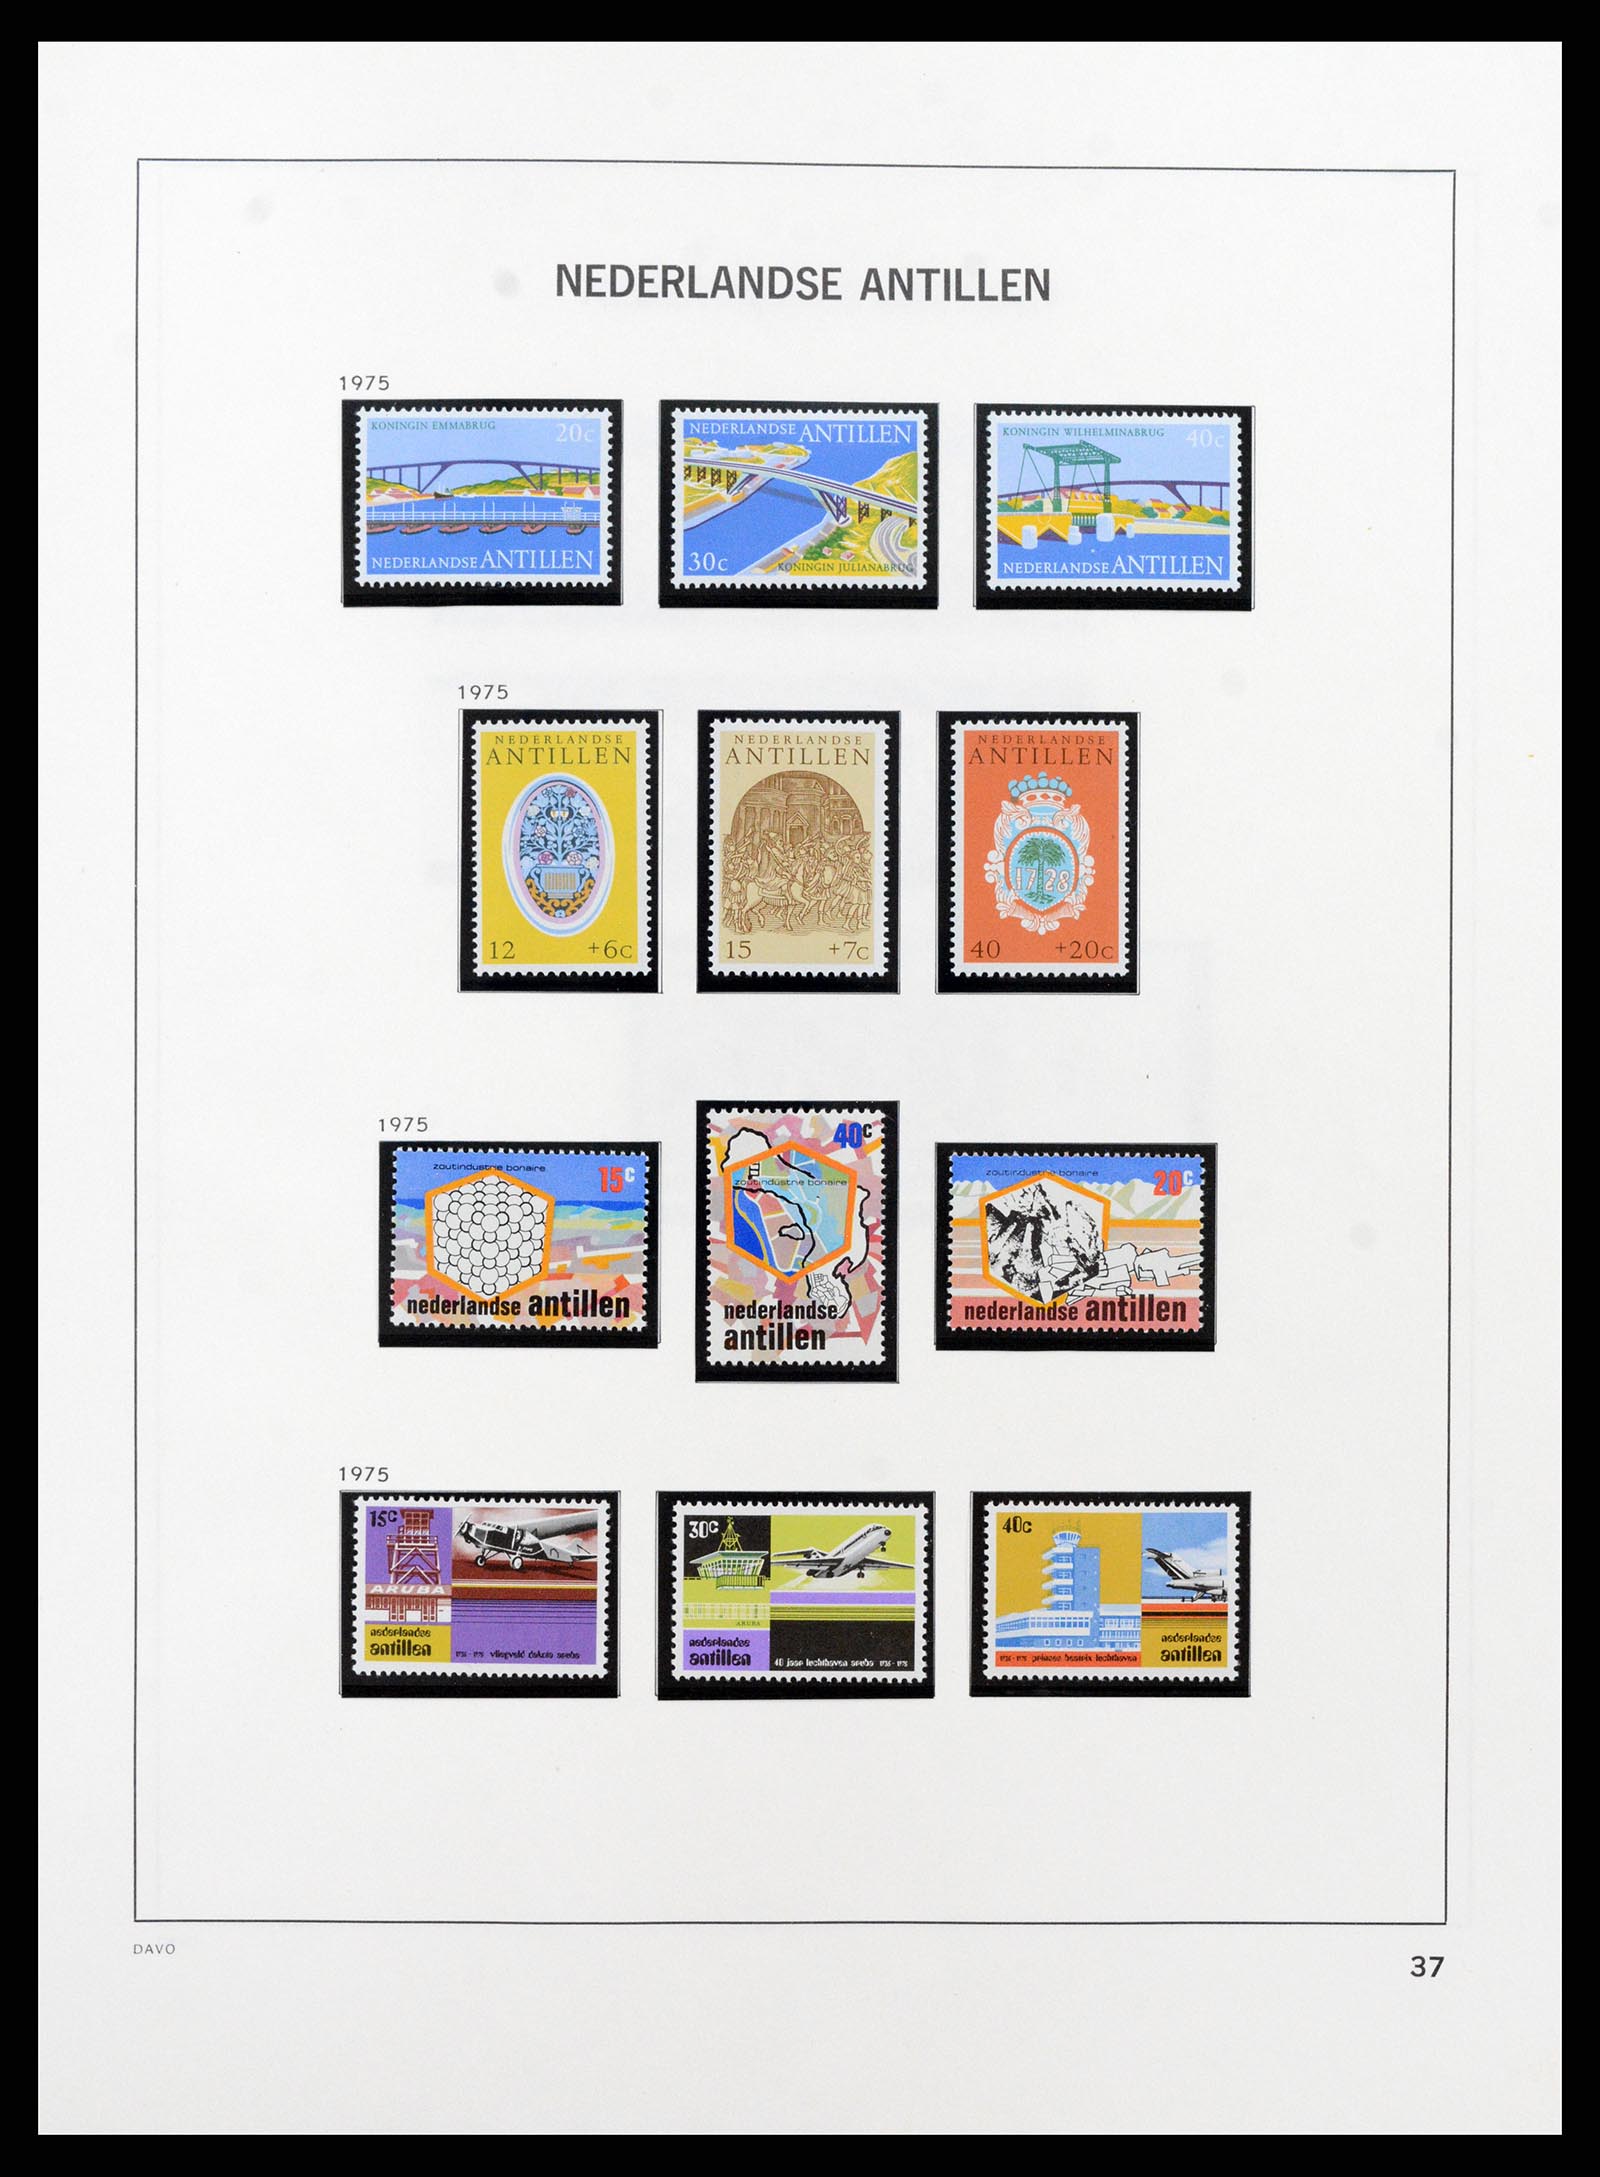 37682 042 - Stamp collection 37682 Netherlands Antilles.